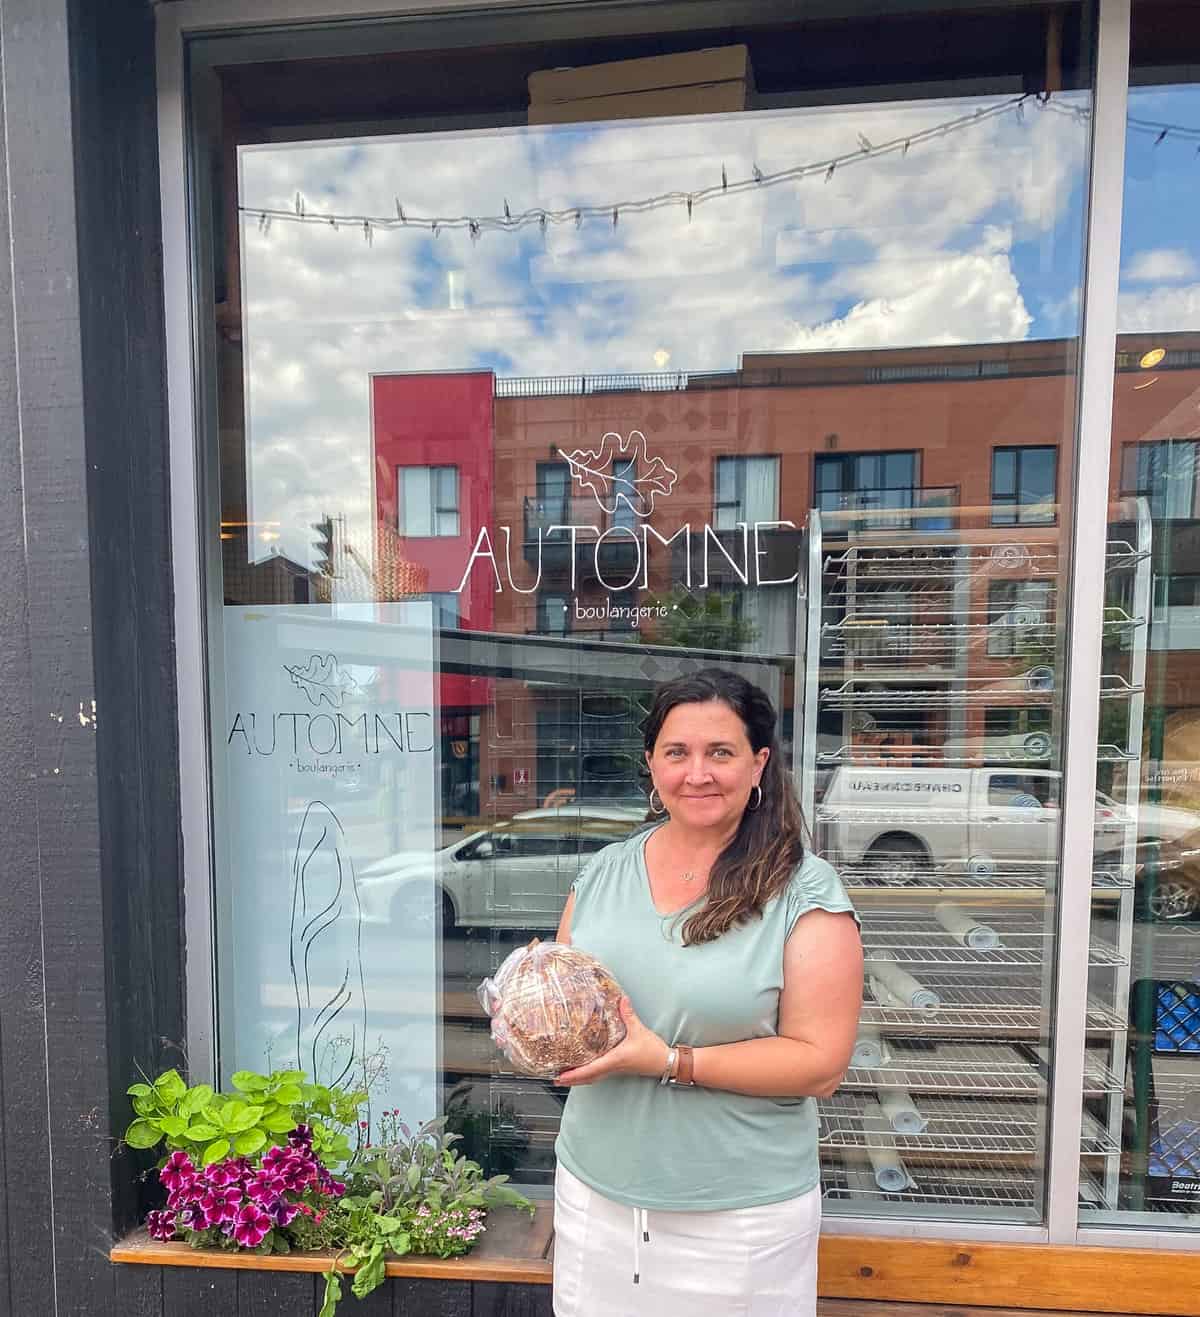 Woman holding loaf of bread outside bakery window.